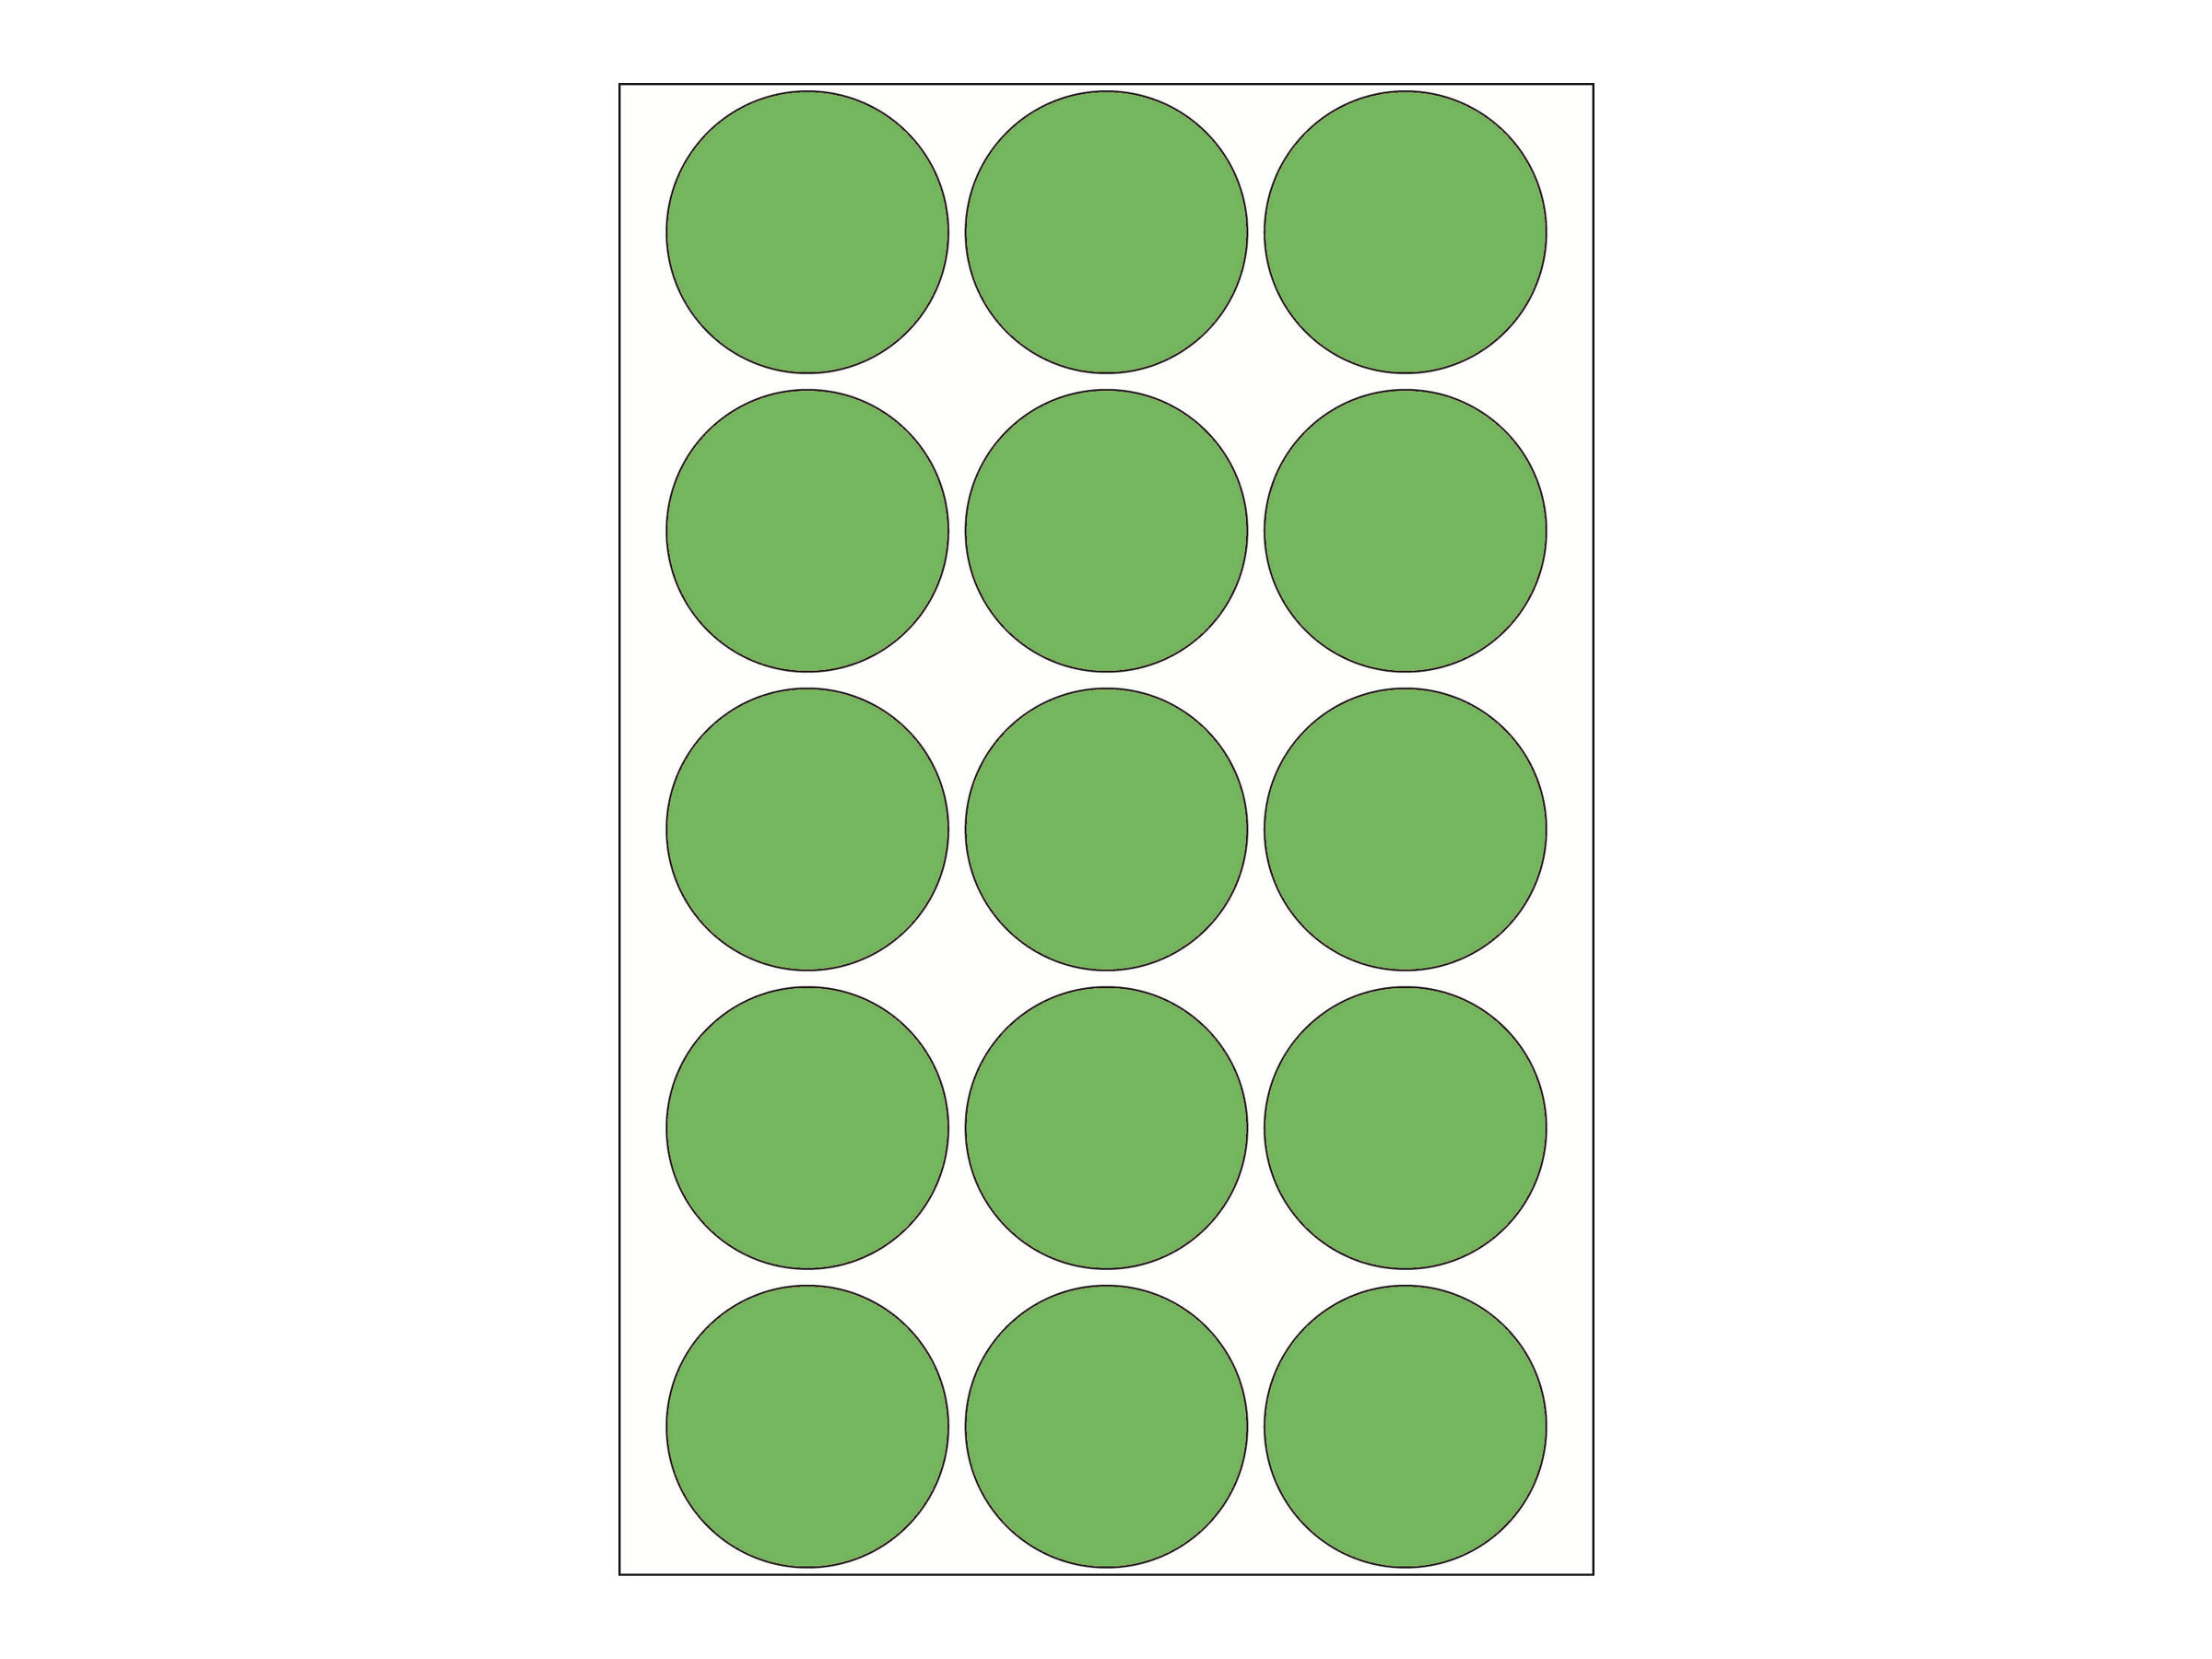 belastning Dæmon Mellem HERMA - Papir - permanent selvklæbende - grøn - 32 mm rund 480 etikette(r)  (32 ark x 15) runde etiketter